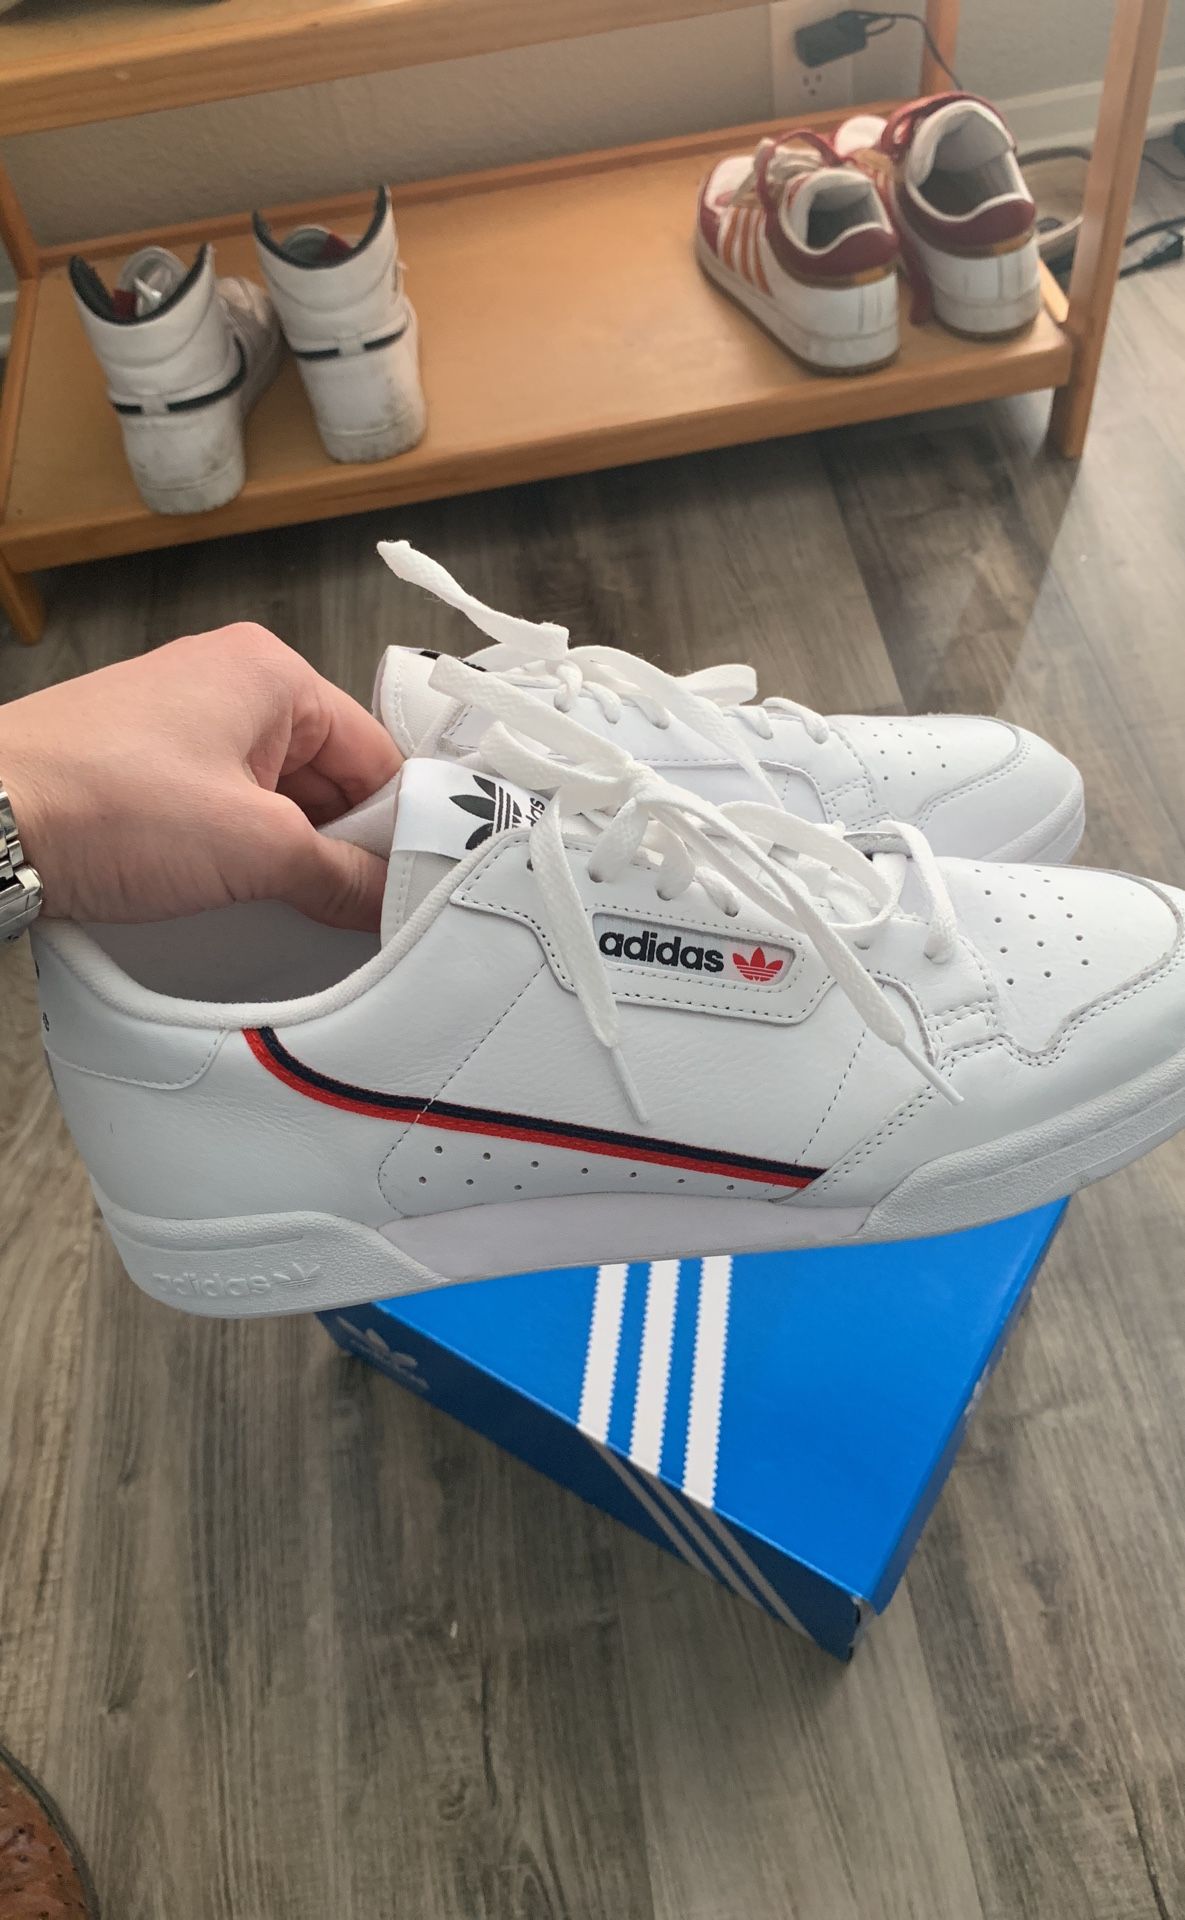 Adidas continental 80 (size 11)